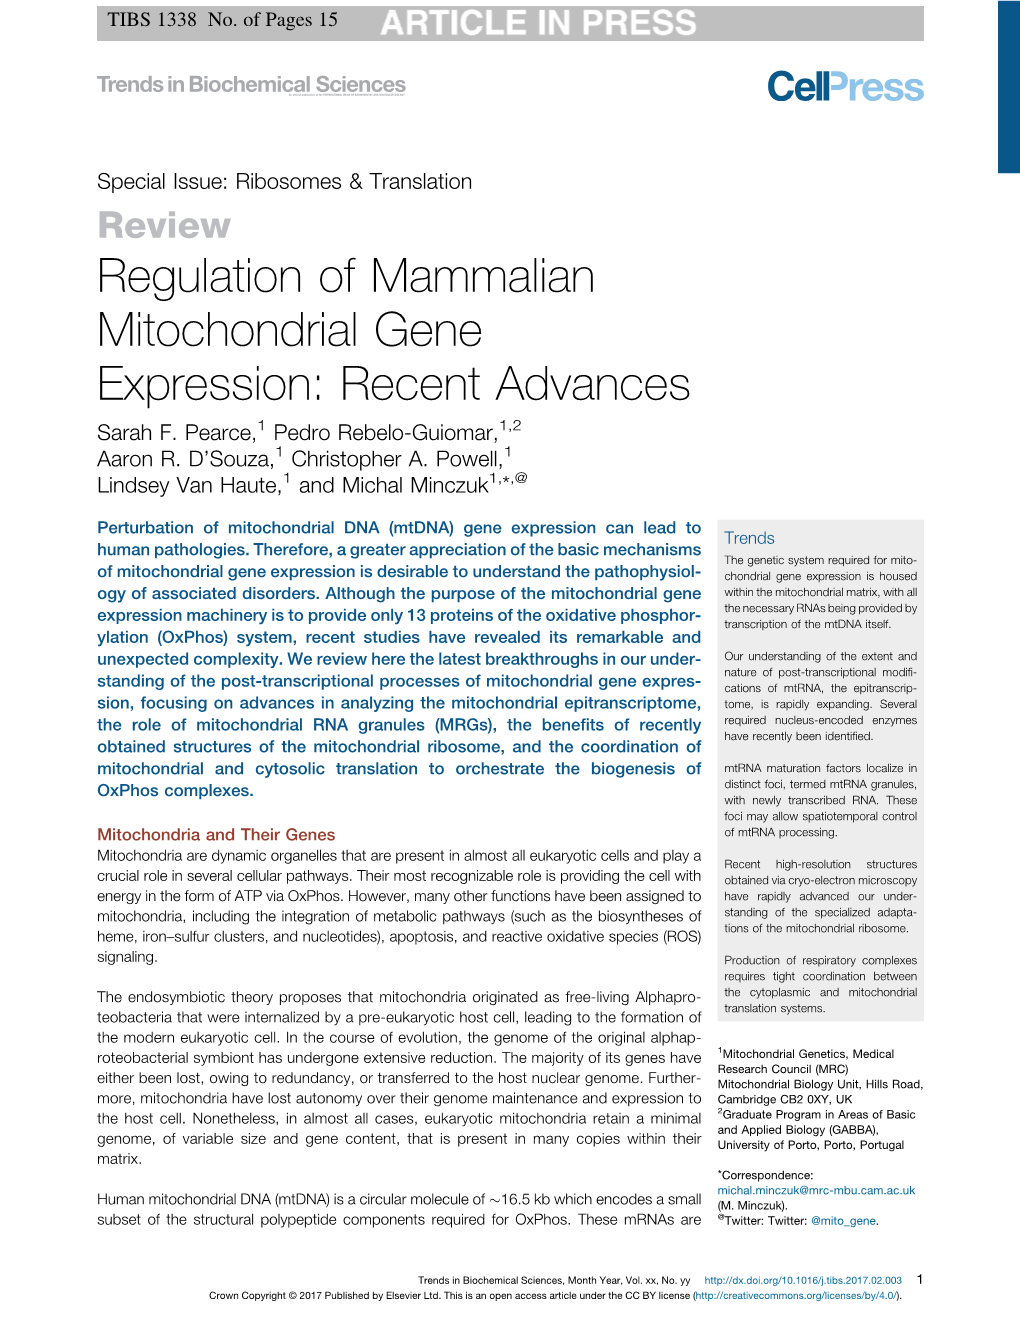 Regulation of Mammalian Mitochondrial Gene Expression: Recent Advances Sarah F